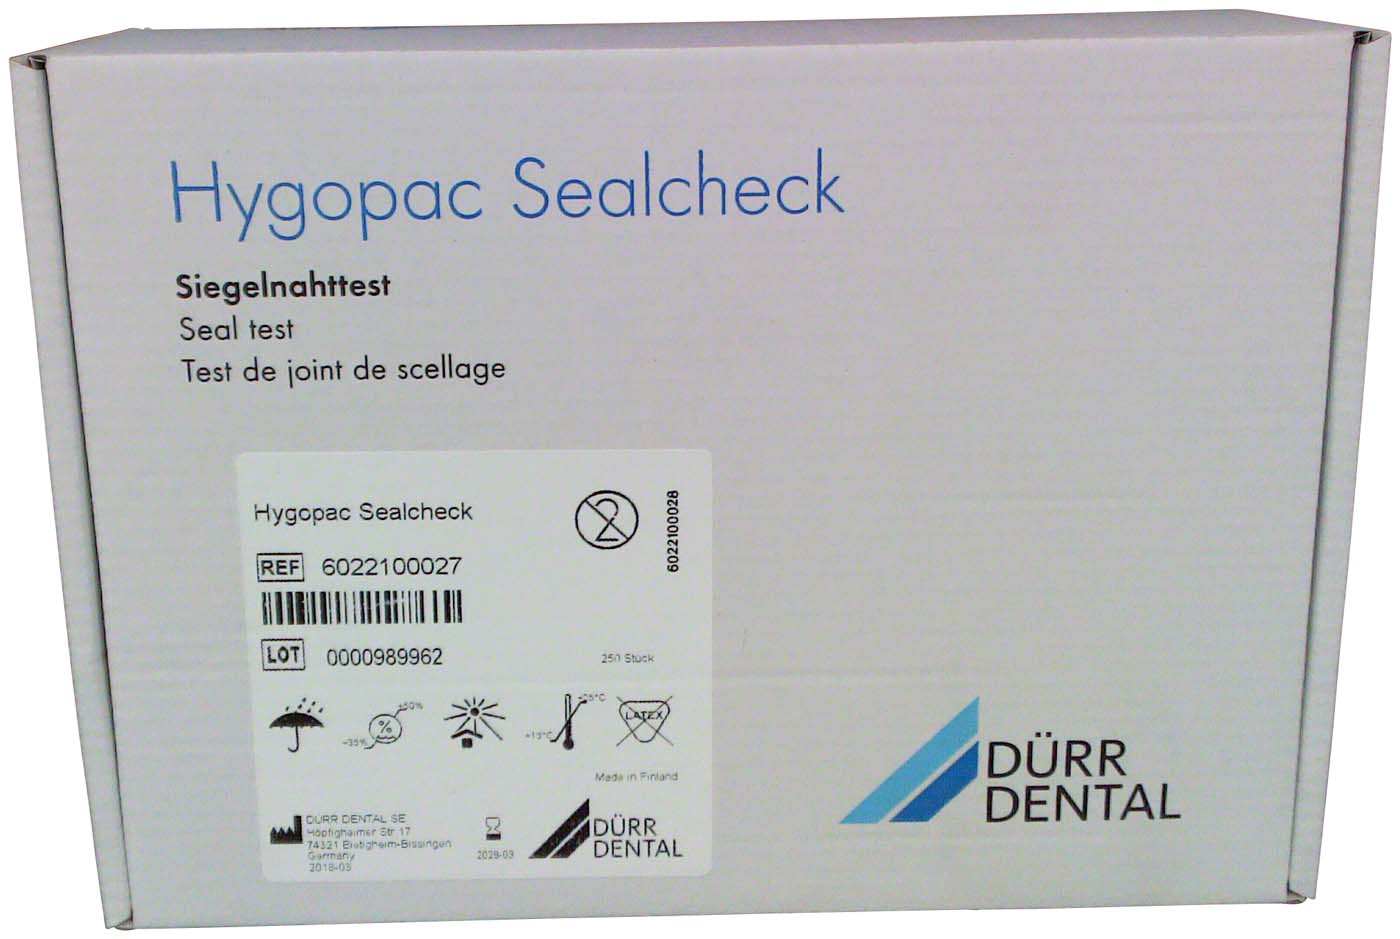 Hygopac Sealcheck Dürr Dental